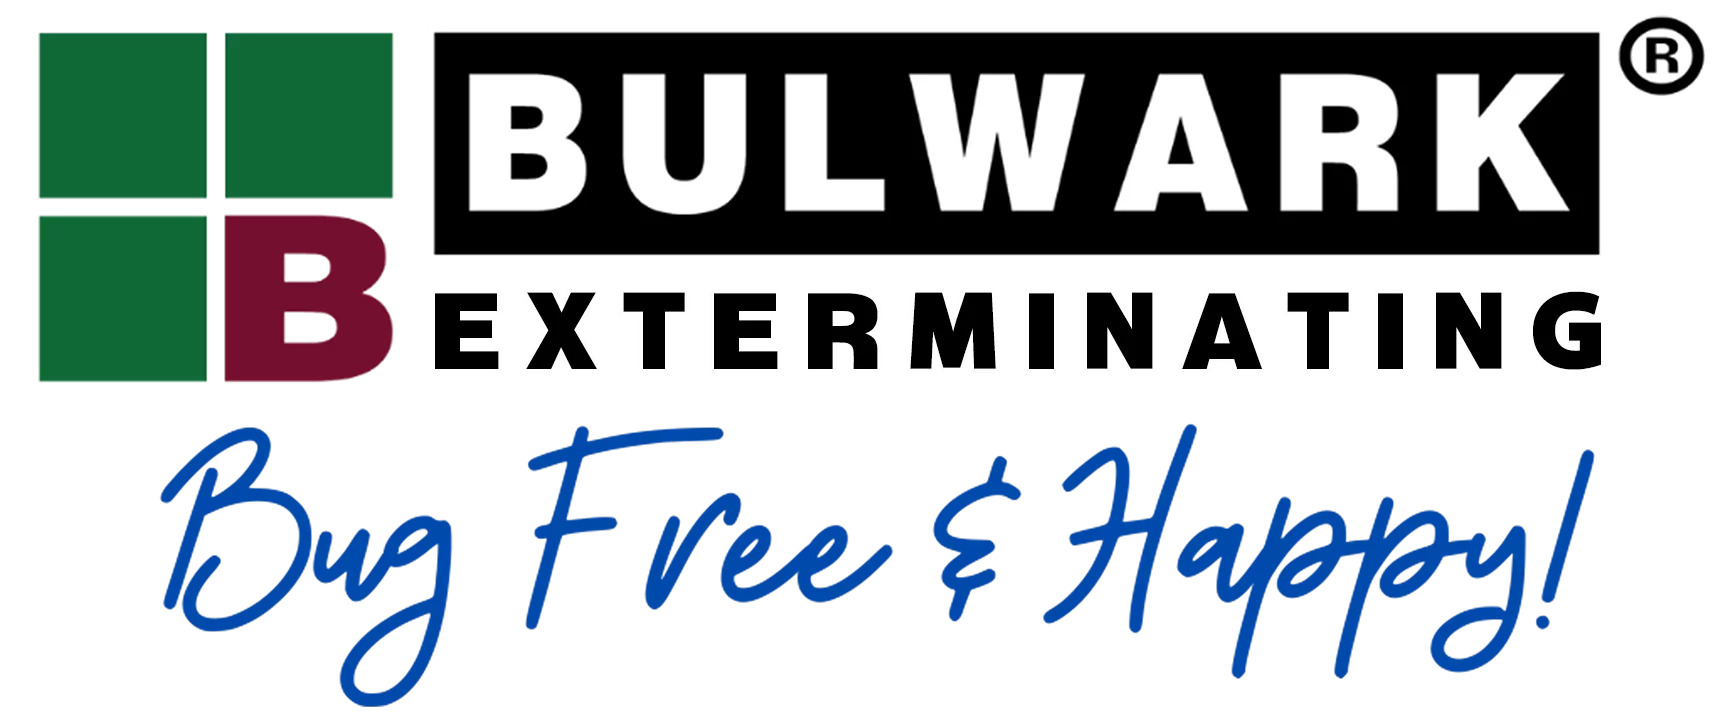 Bulwark Exterminating in Matthews Logo